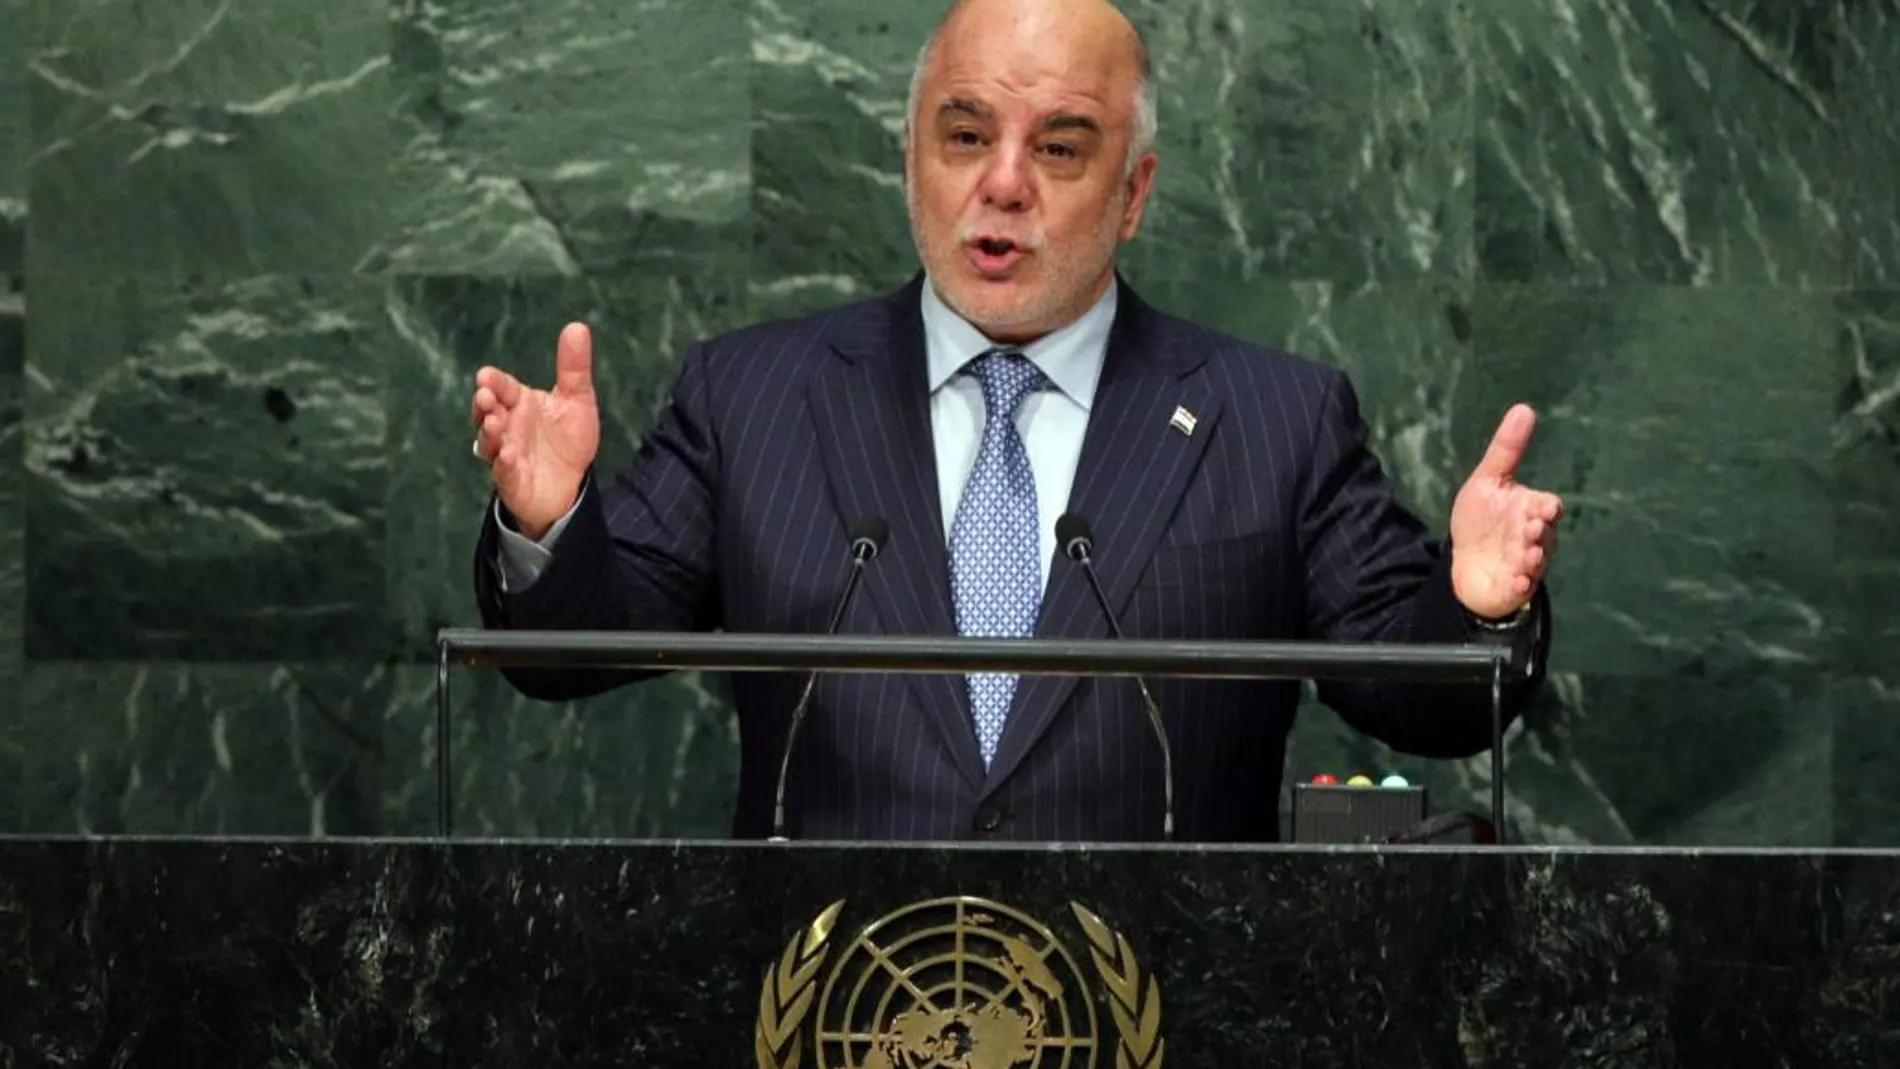 El primer ministro de Irak, Haider Al-Abadi en la Asamblea General de la ONU.